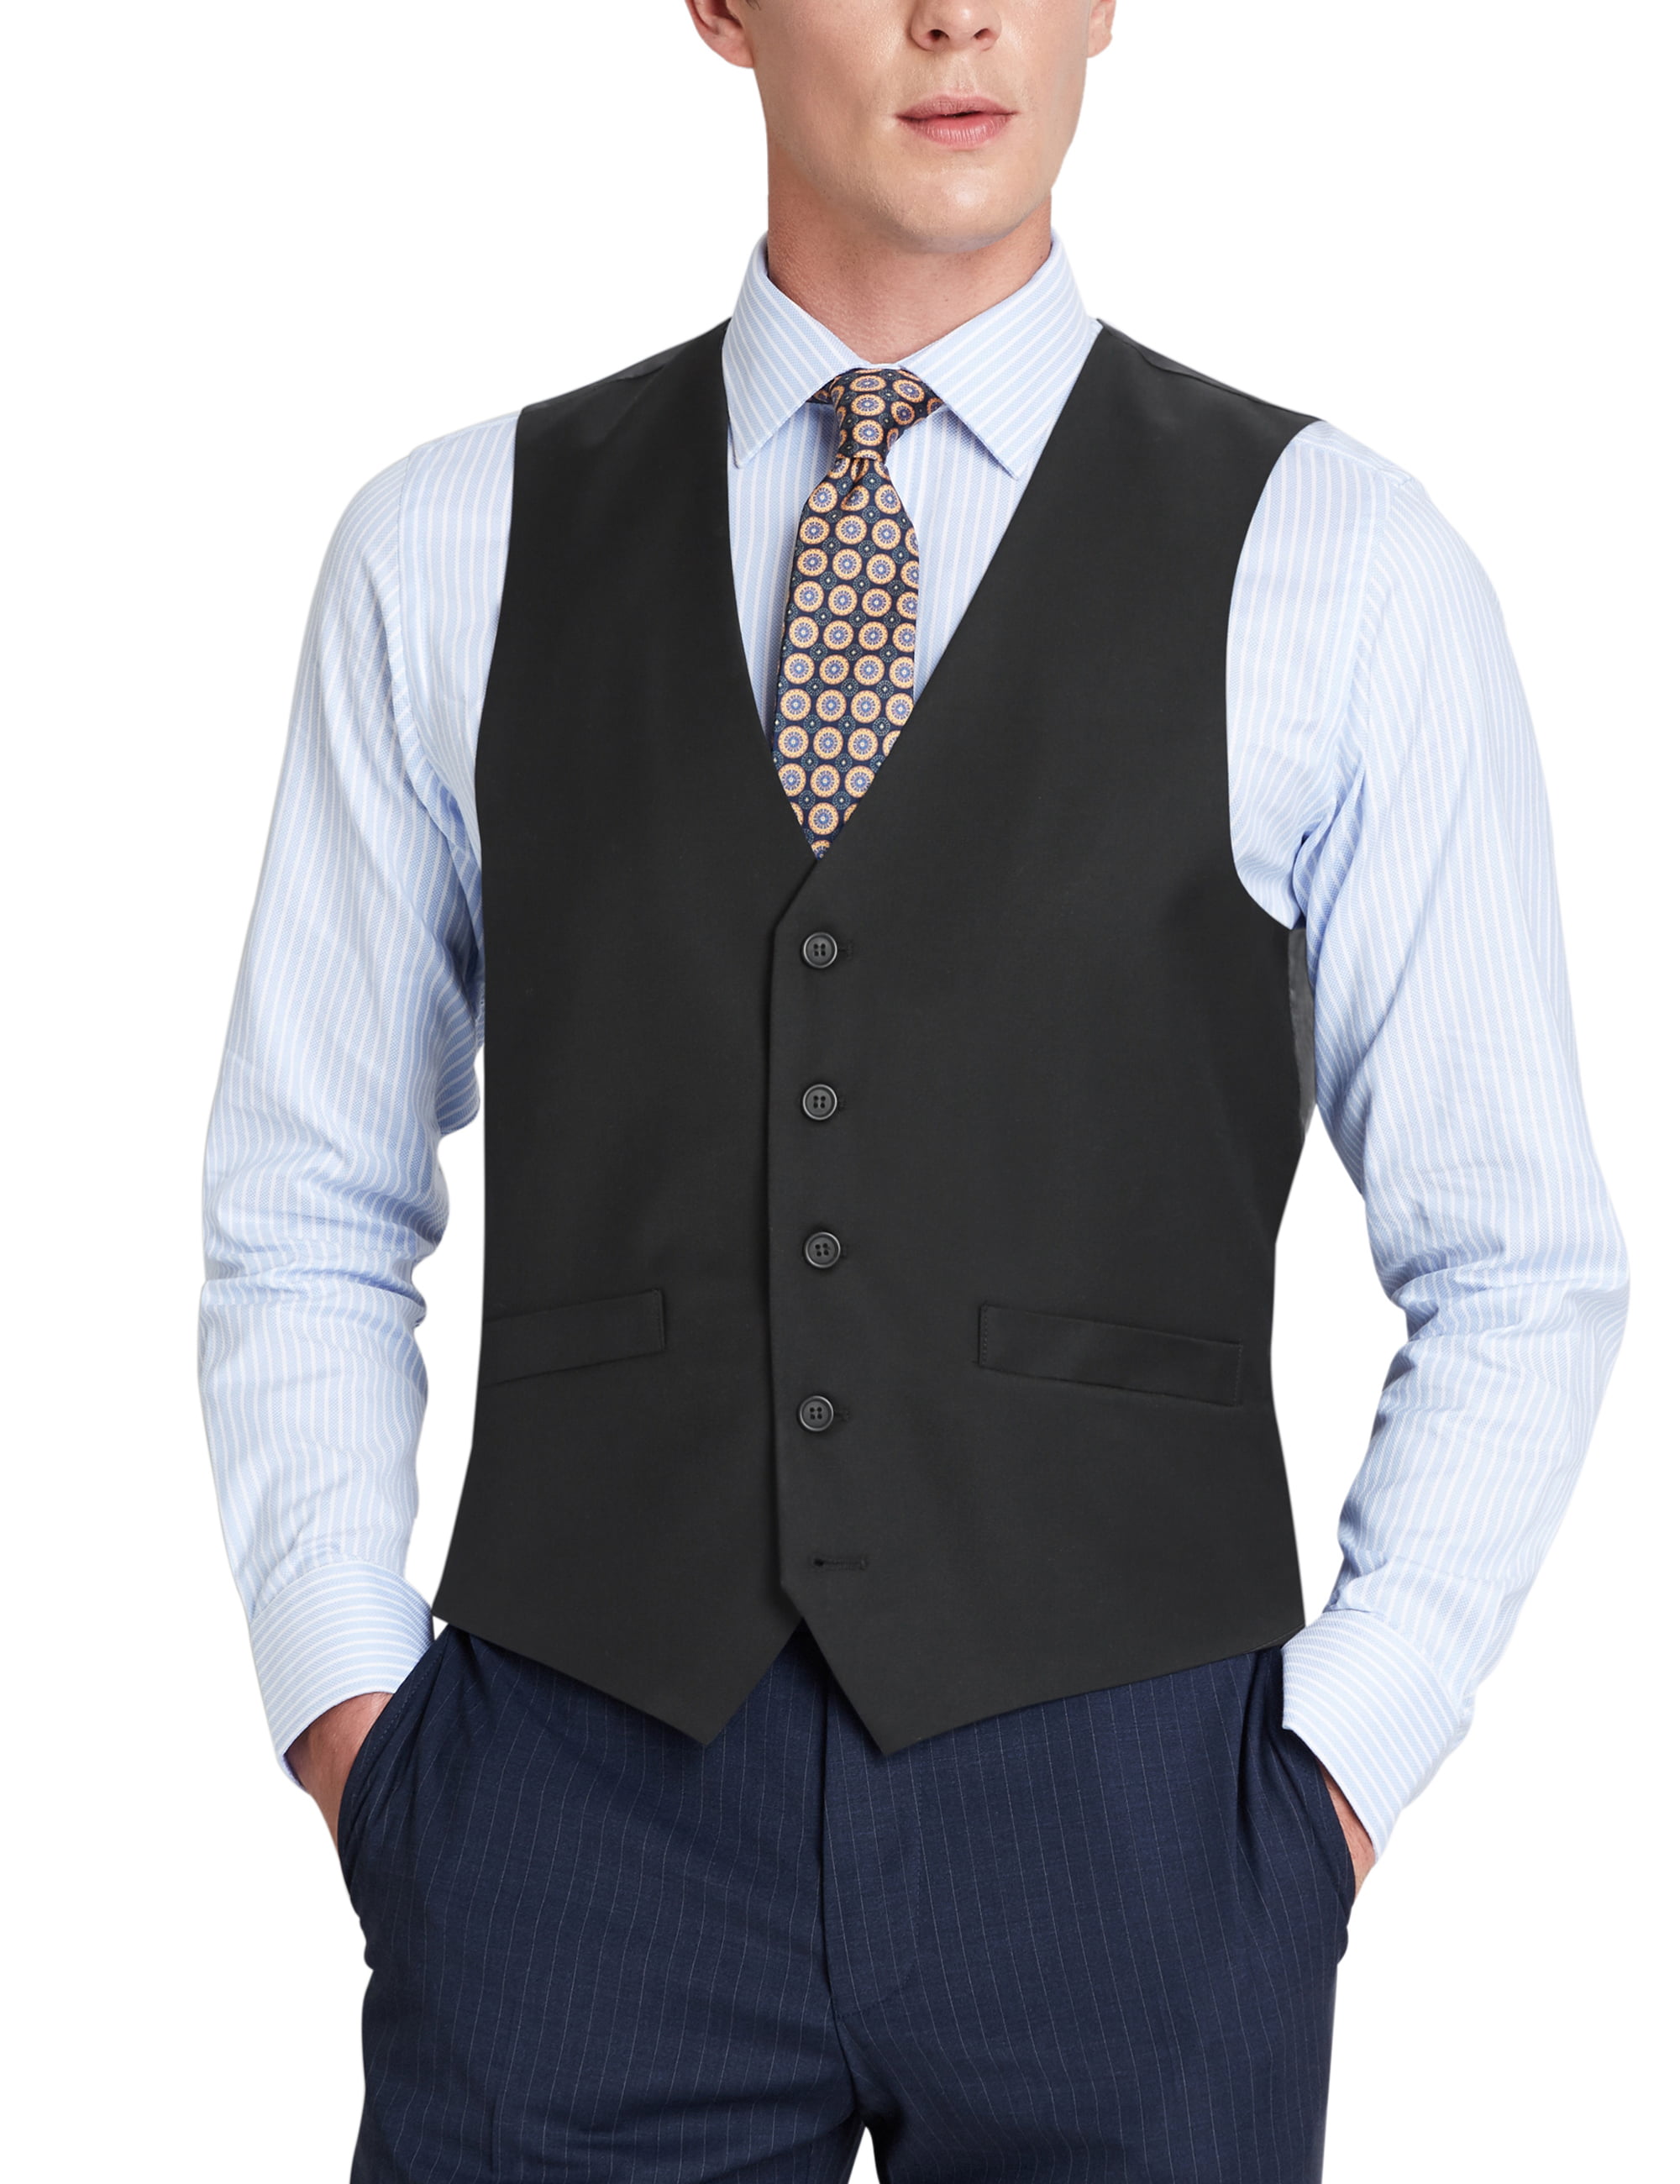 $109 NWOT KINGS' COURT Sz 56 Tall Grey Easy Movement 5 Button Suit Vest 5073